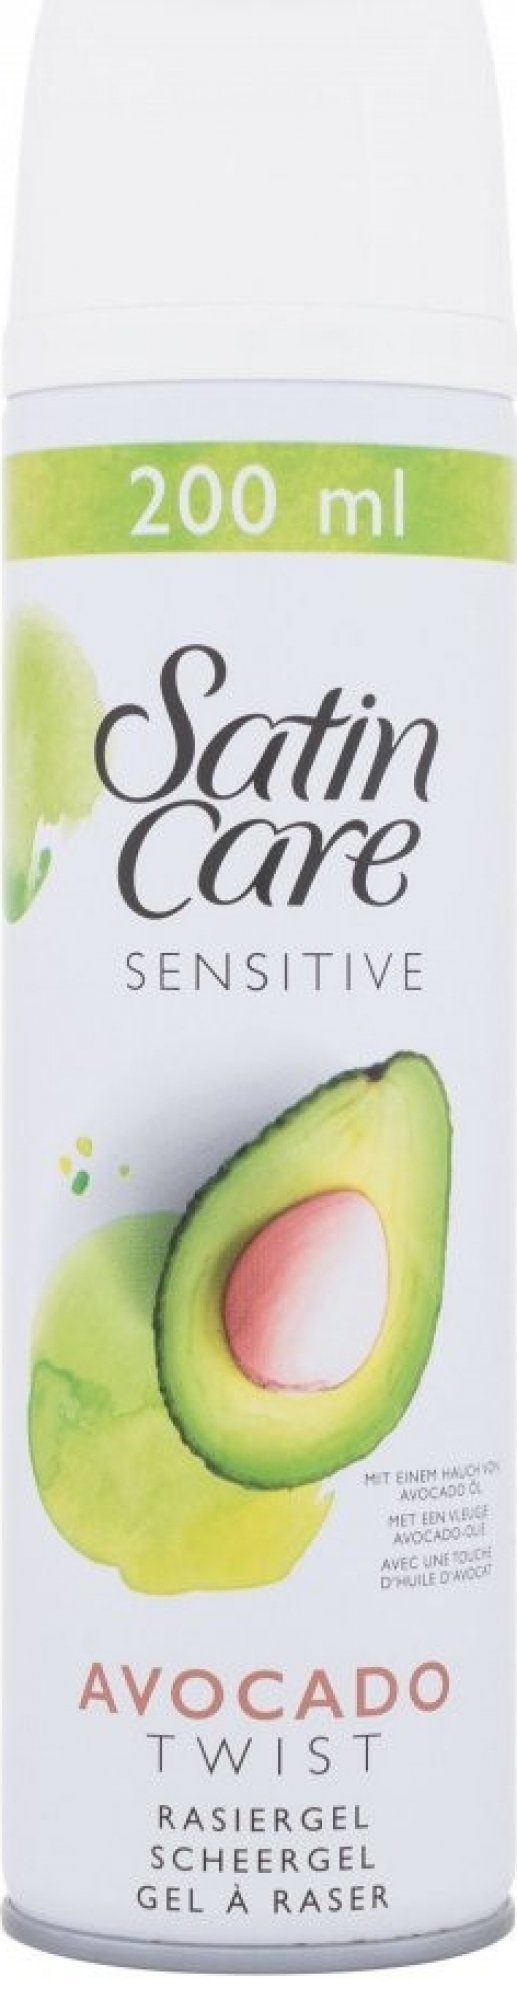 Gillette Satin Care Sensitive Avocado Twist Gel na holení, 200 ml